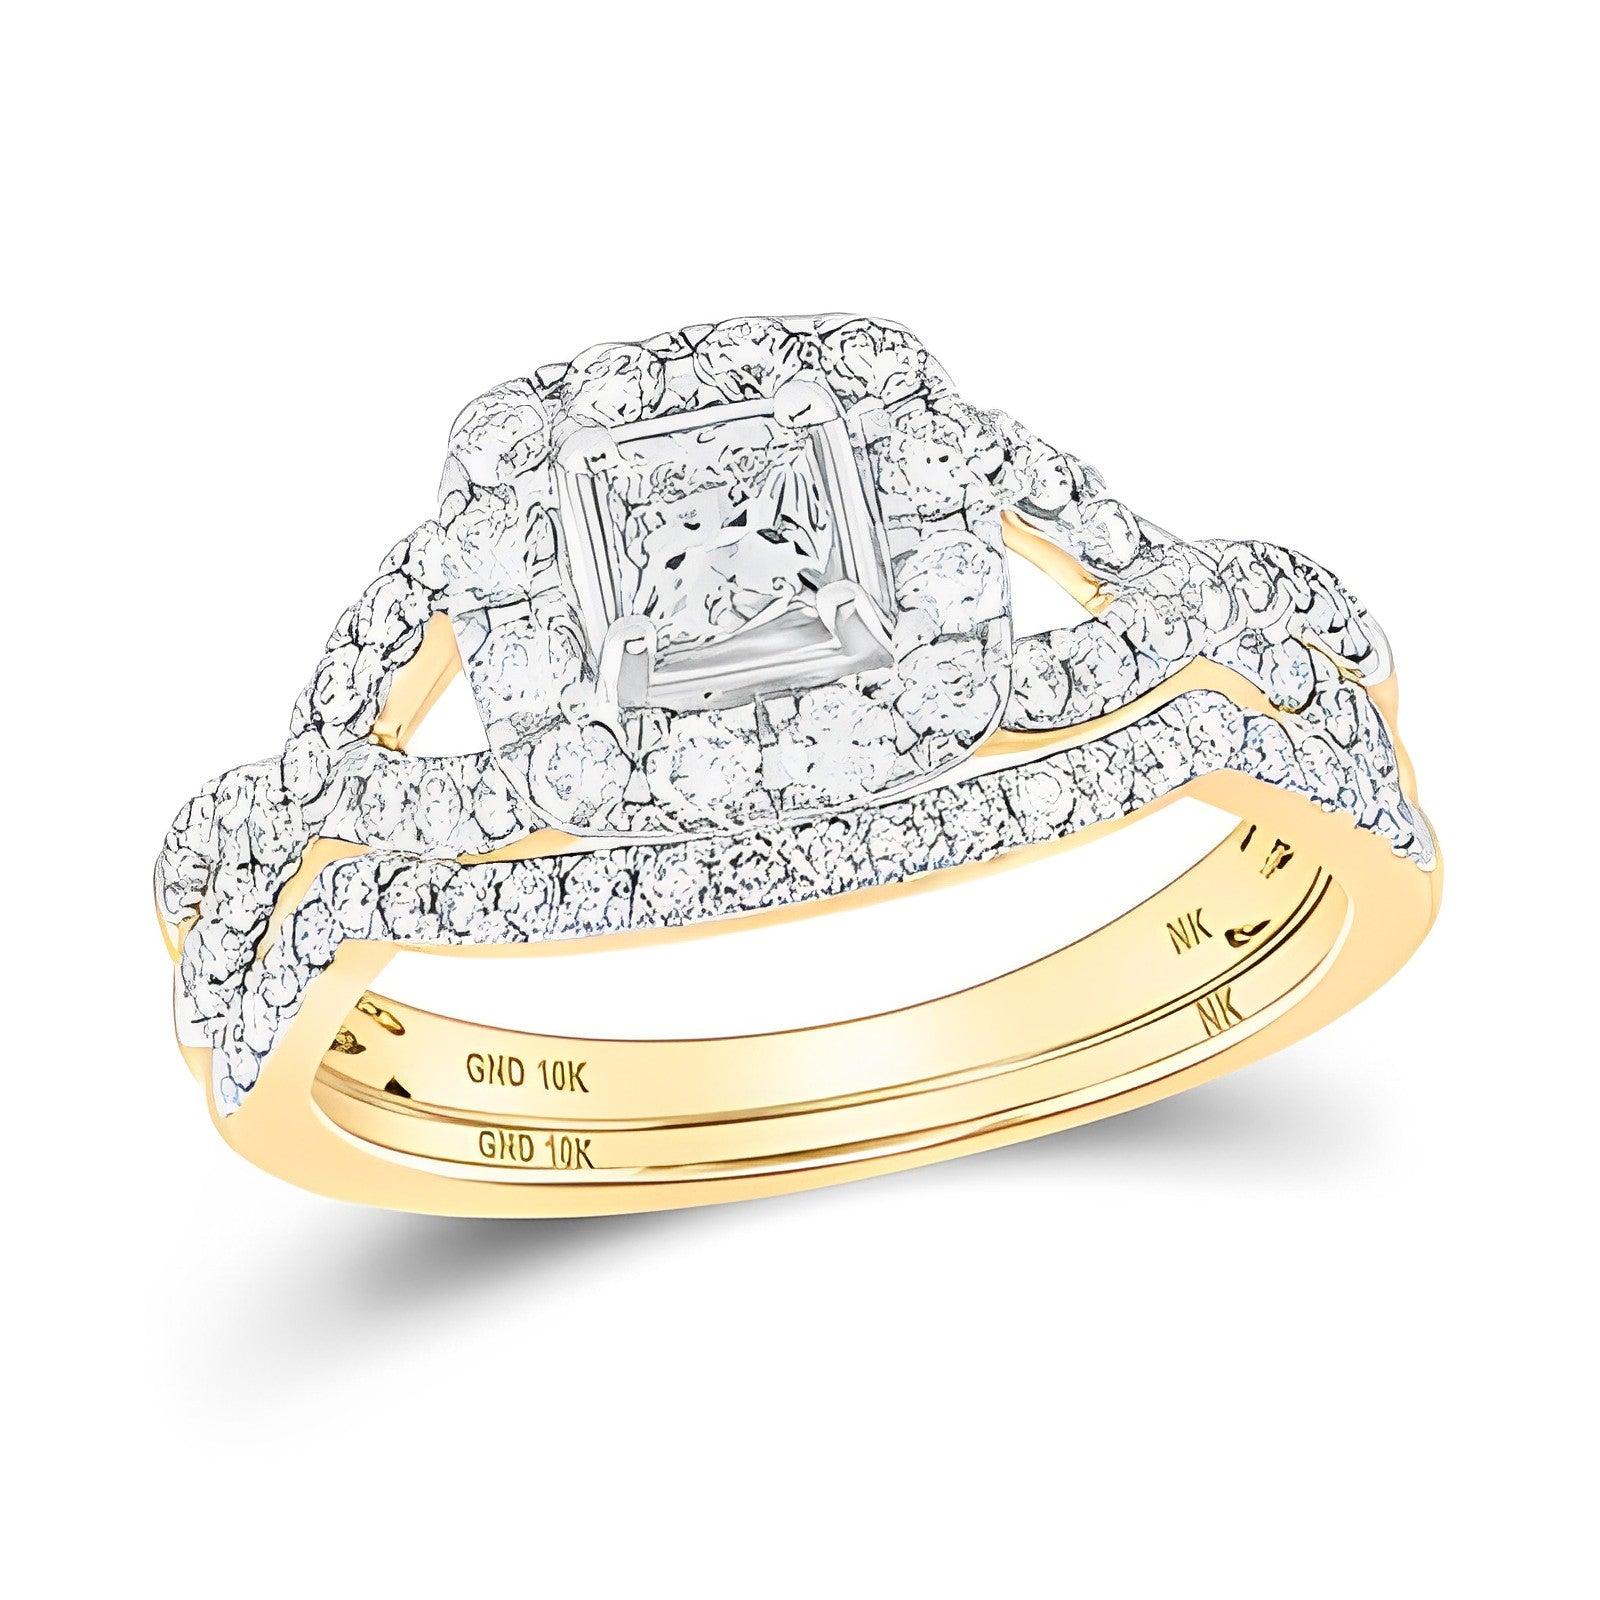 14K TWO-TONE GOLD PRINCESS DIAMOND BRIDAL WEDDING RING SET 1-1/4 CTTW (CERTIFIED)